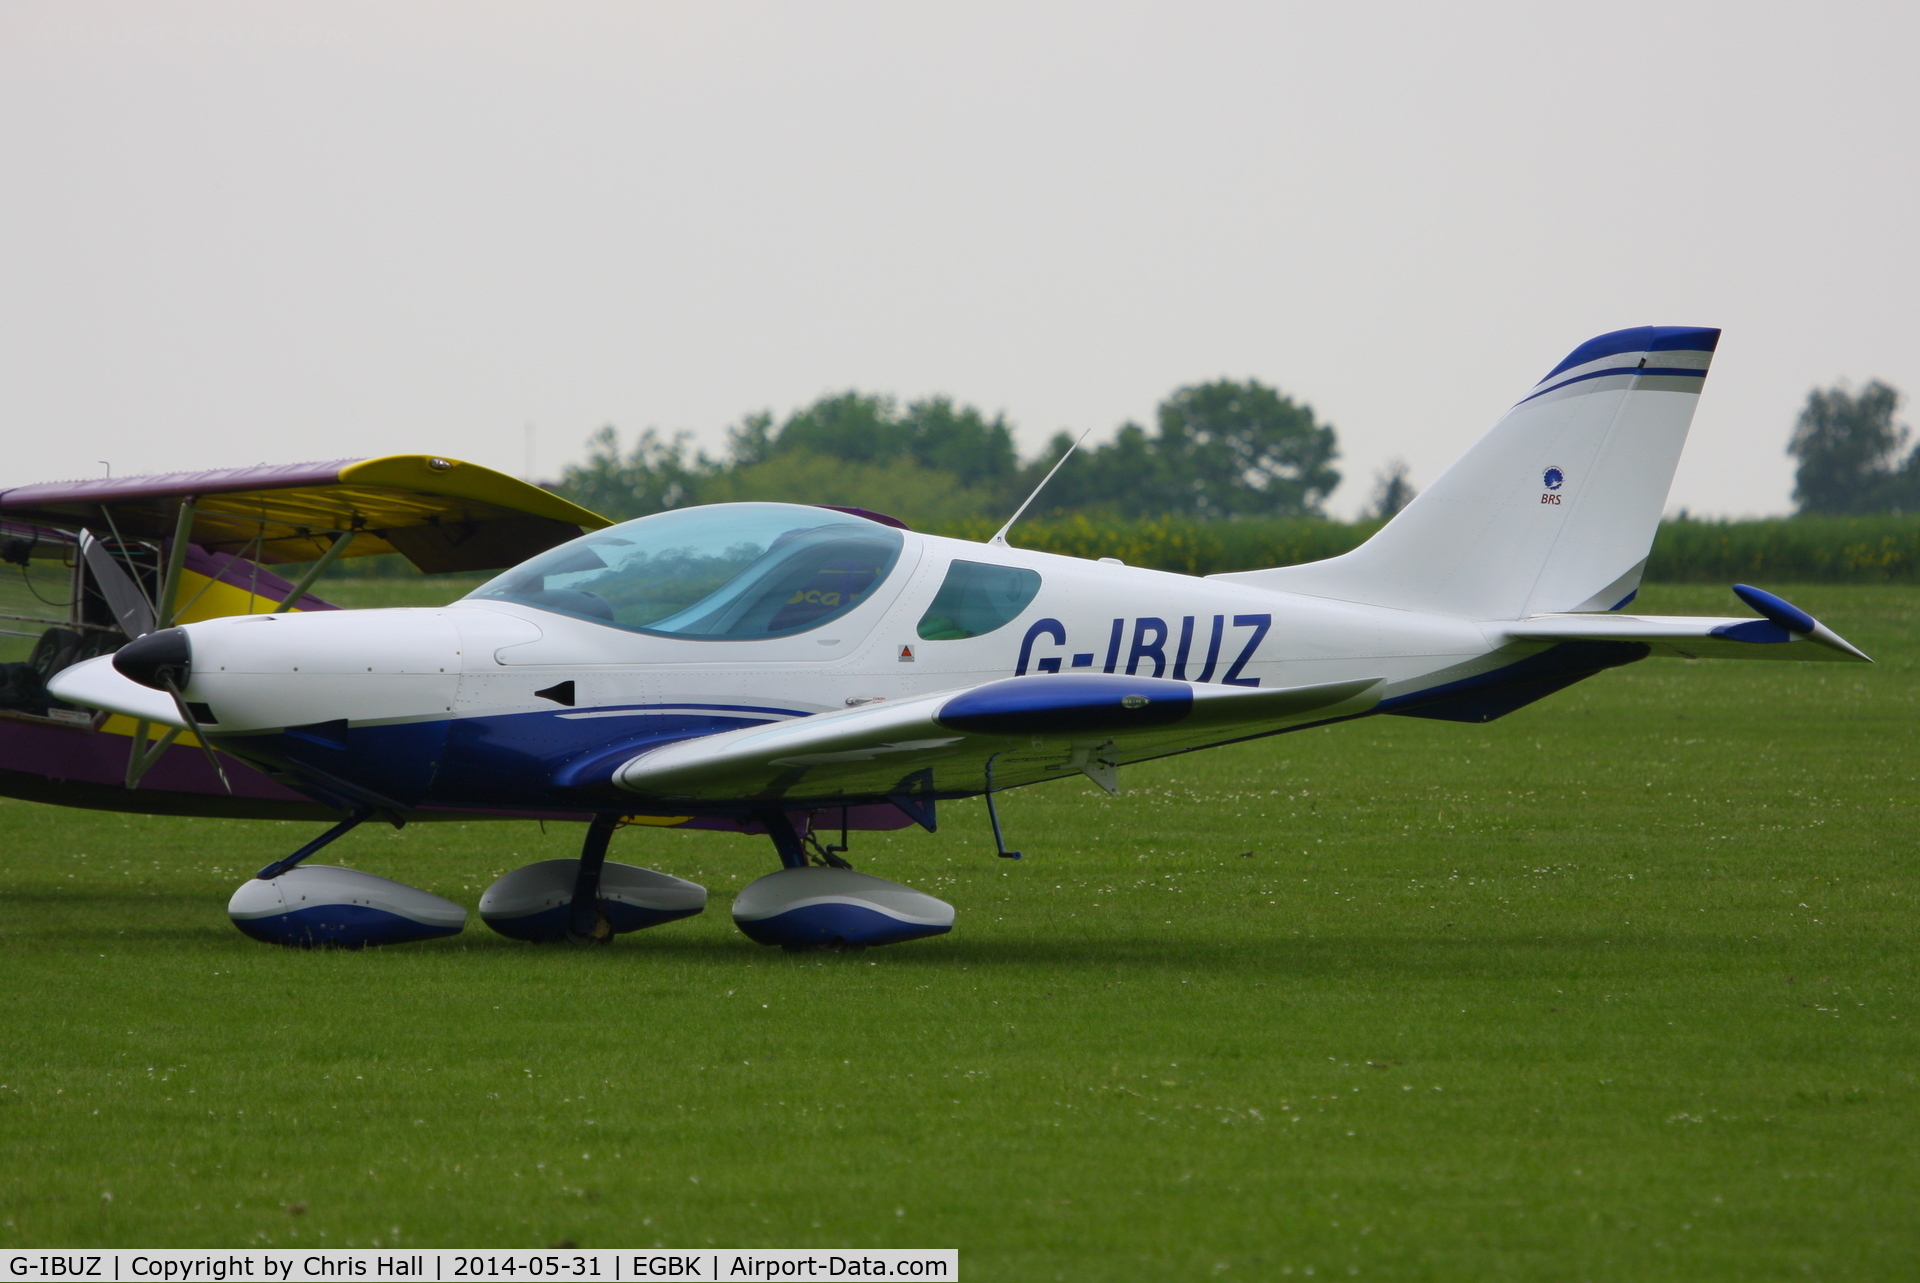 G-IBUZ, 2010 CZAW SportCruiser C/N LAA 338-14825, at AeroExpo 2014